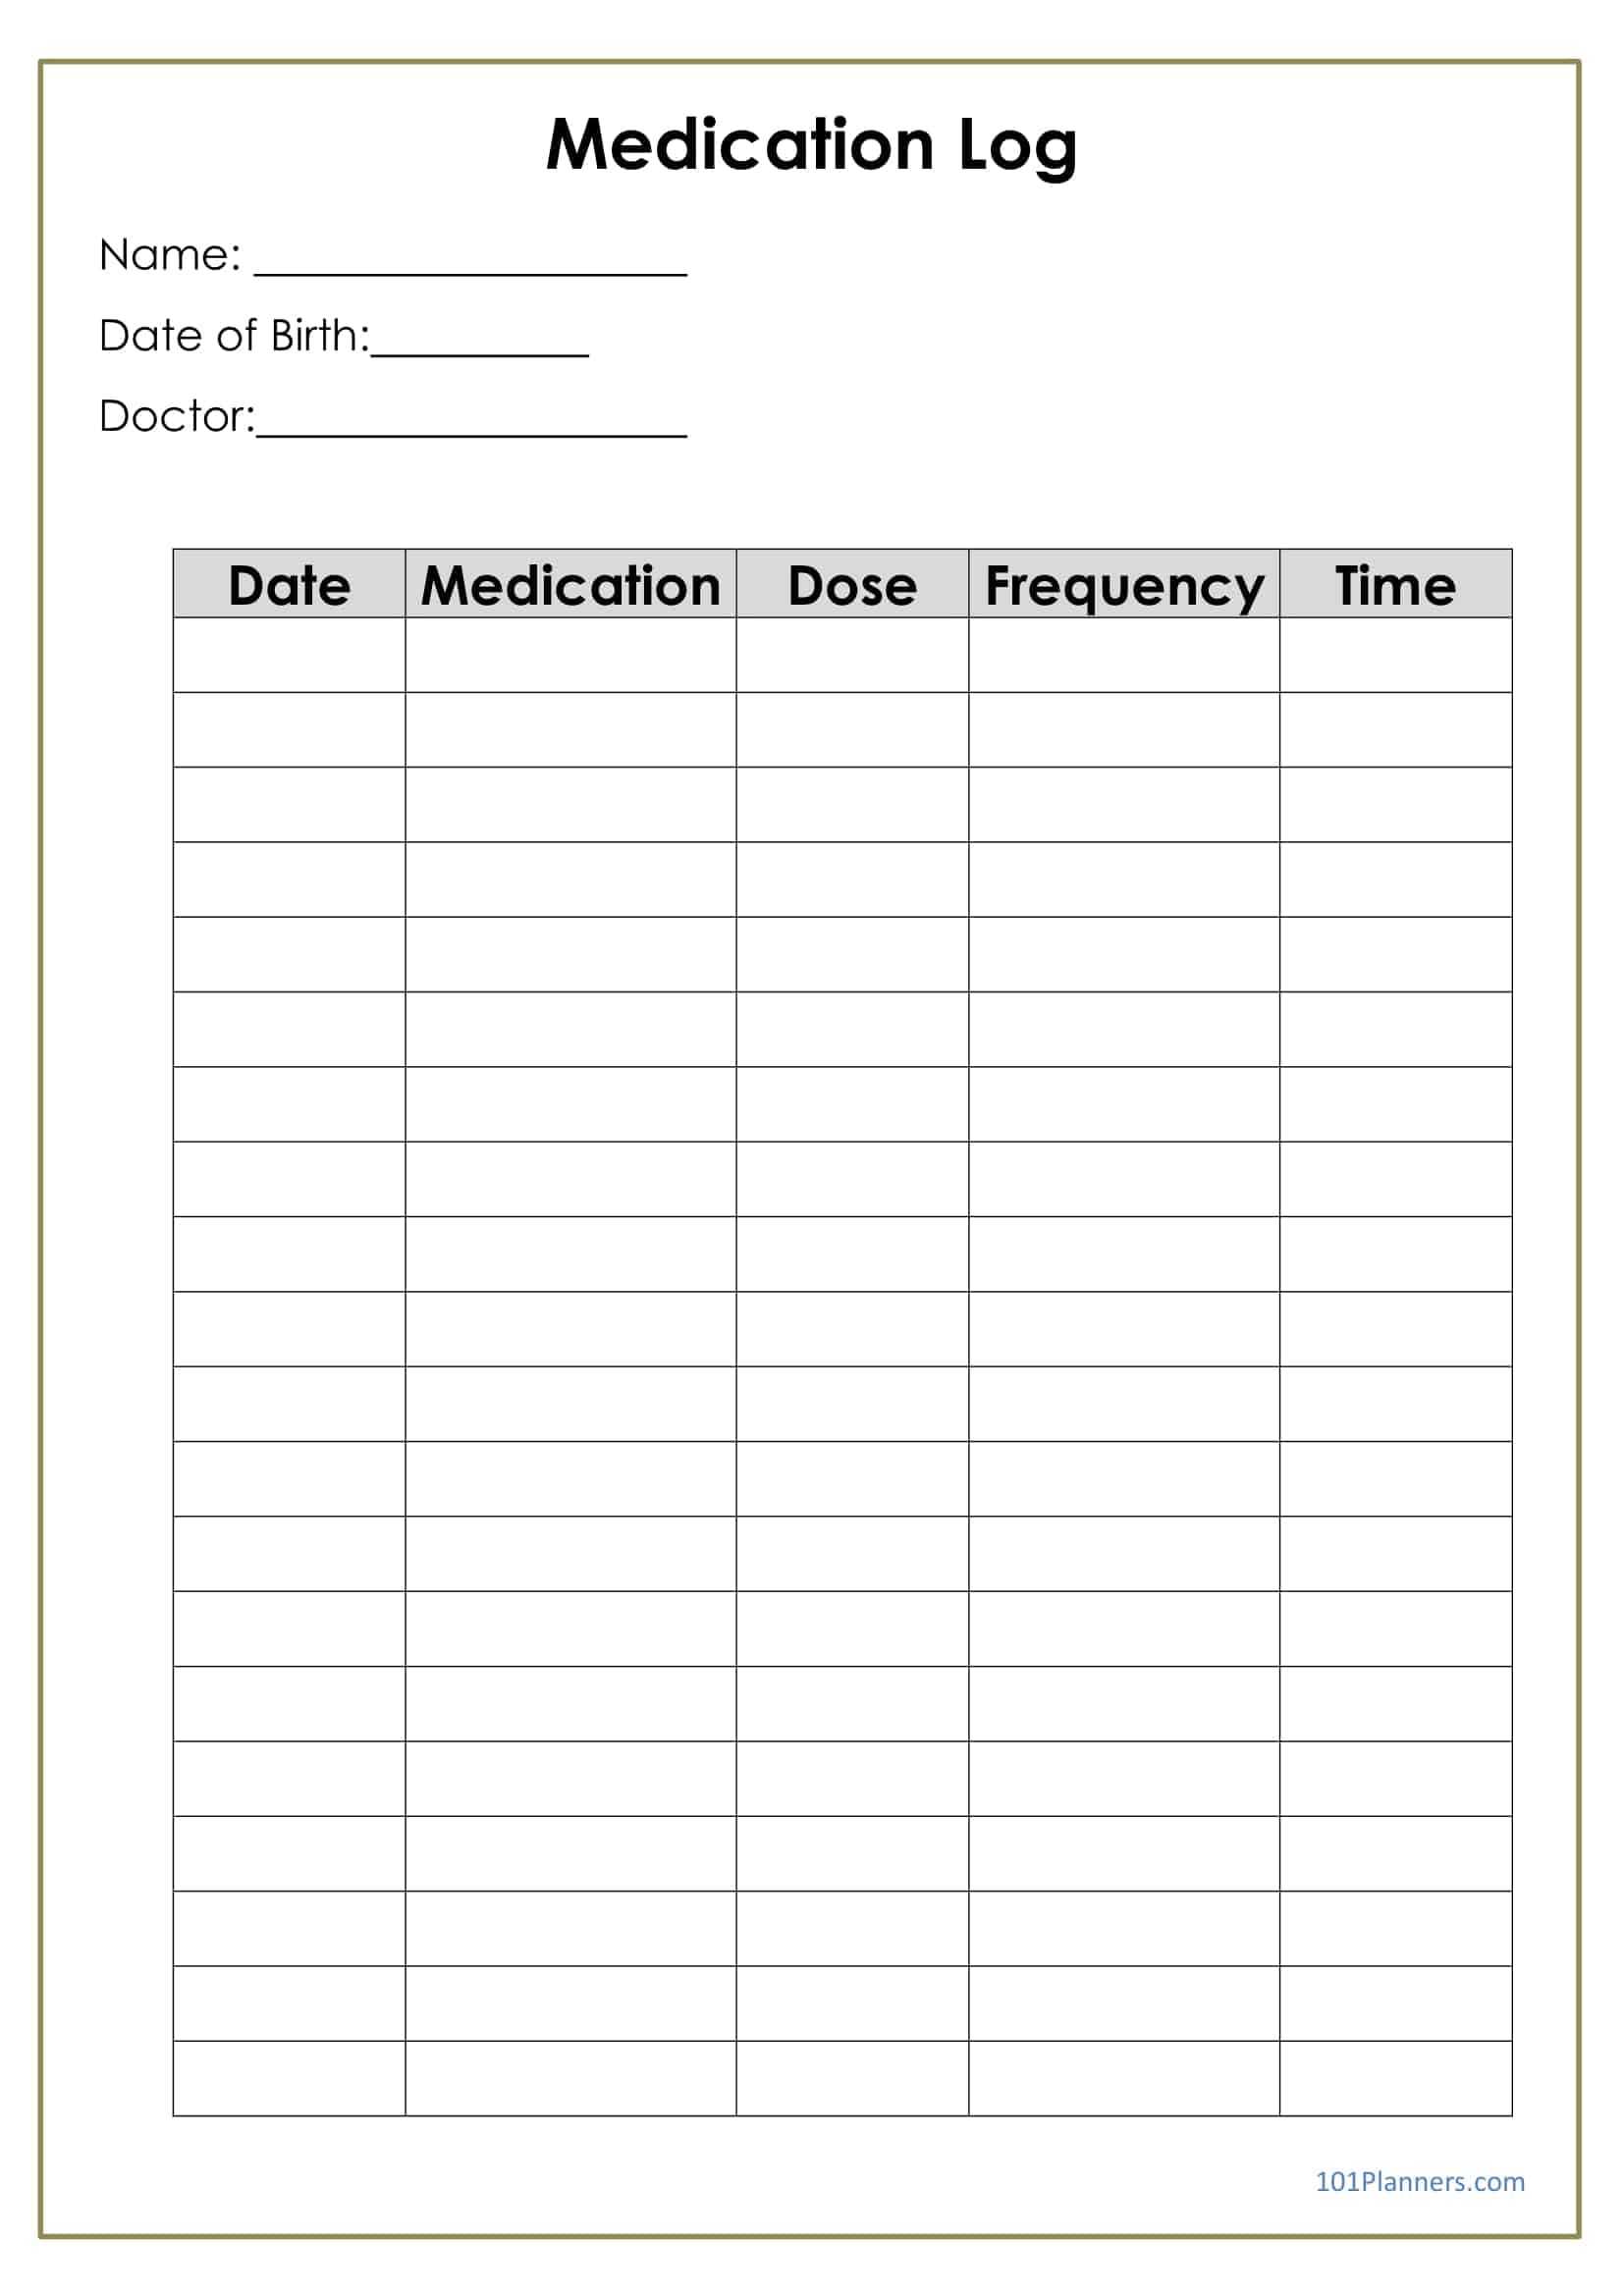 Medication Log With Blank Medication List Templates